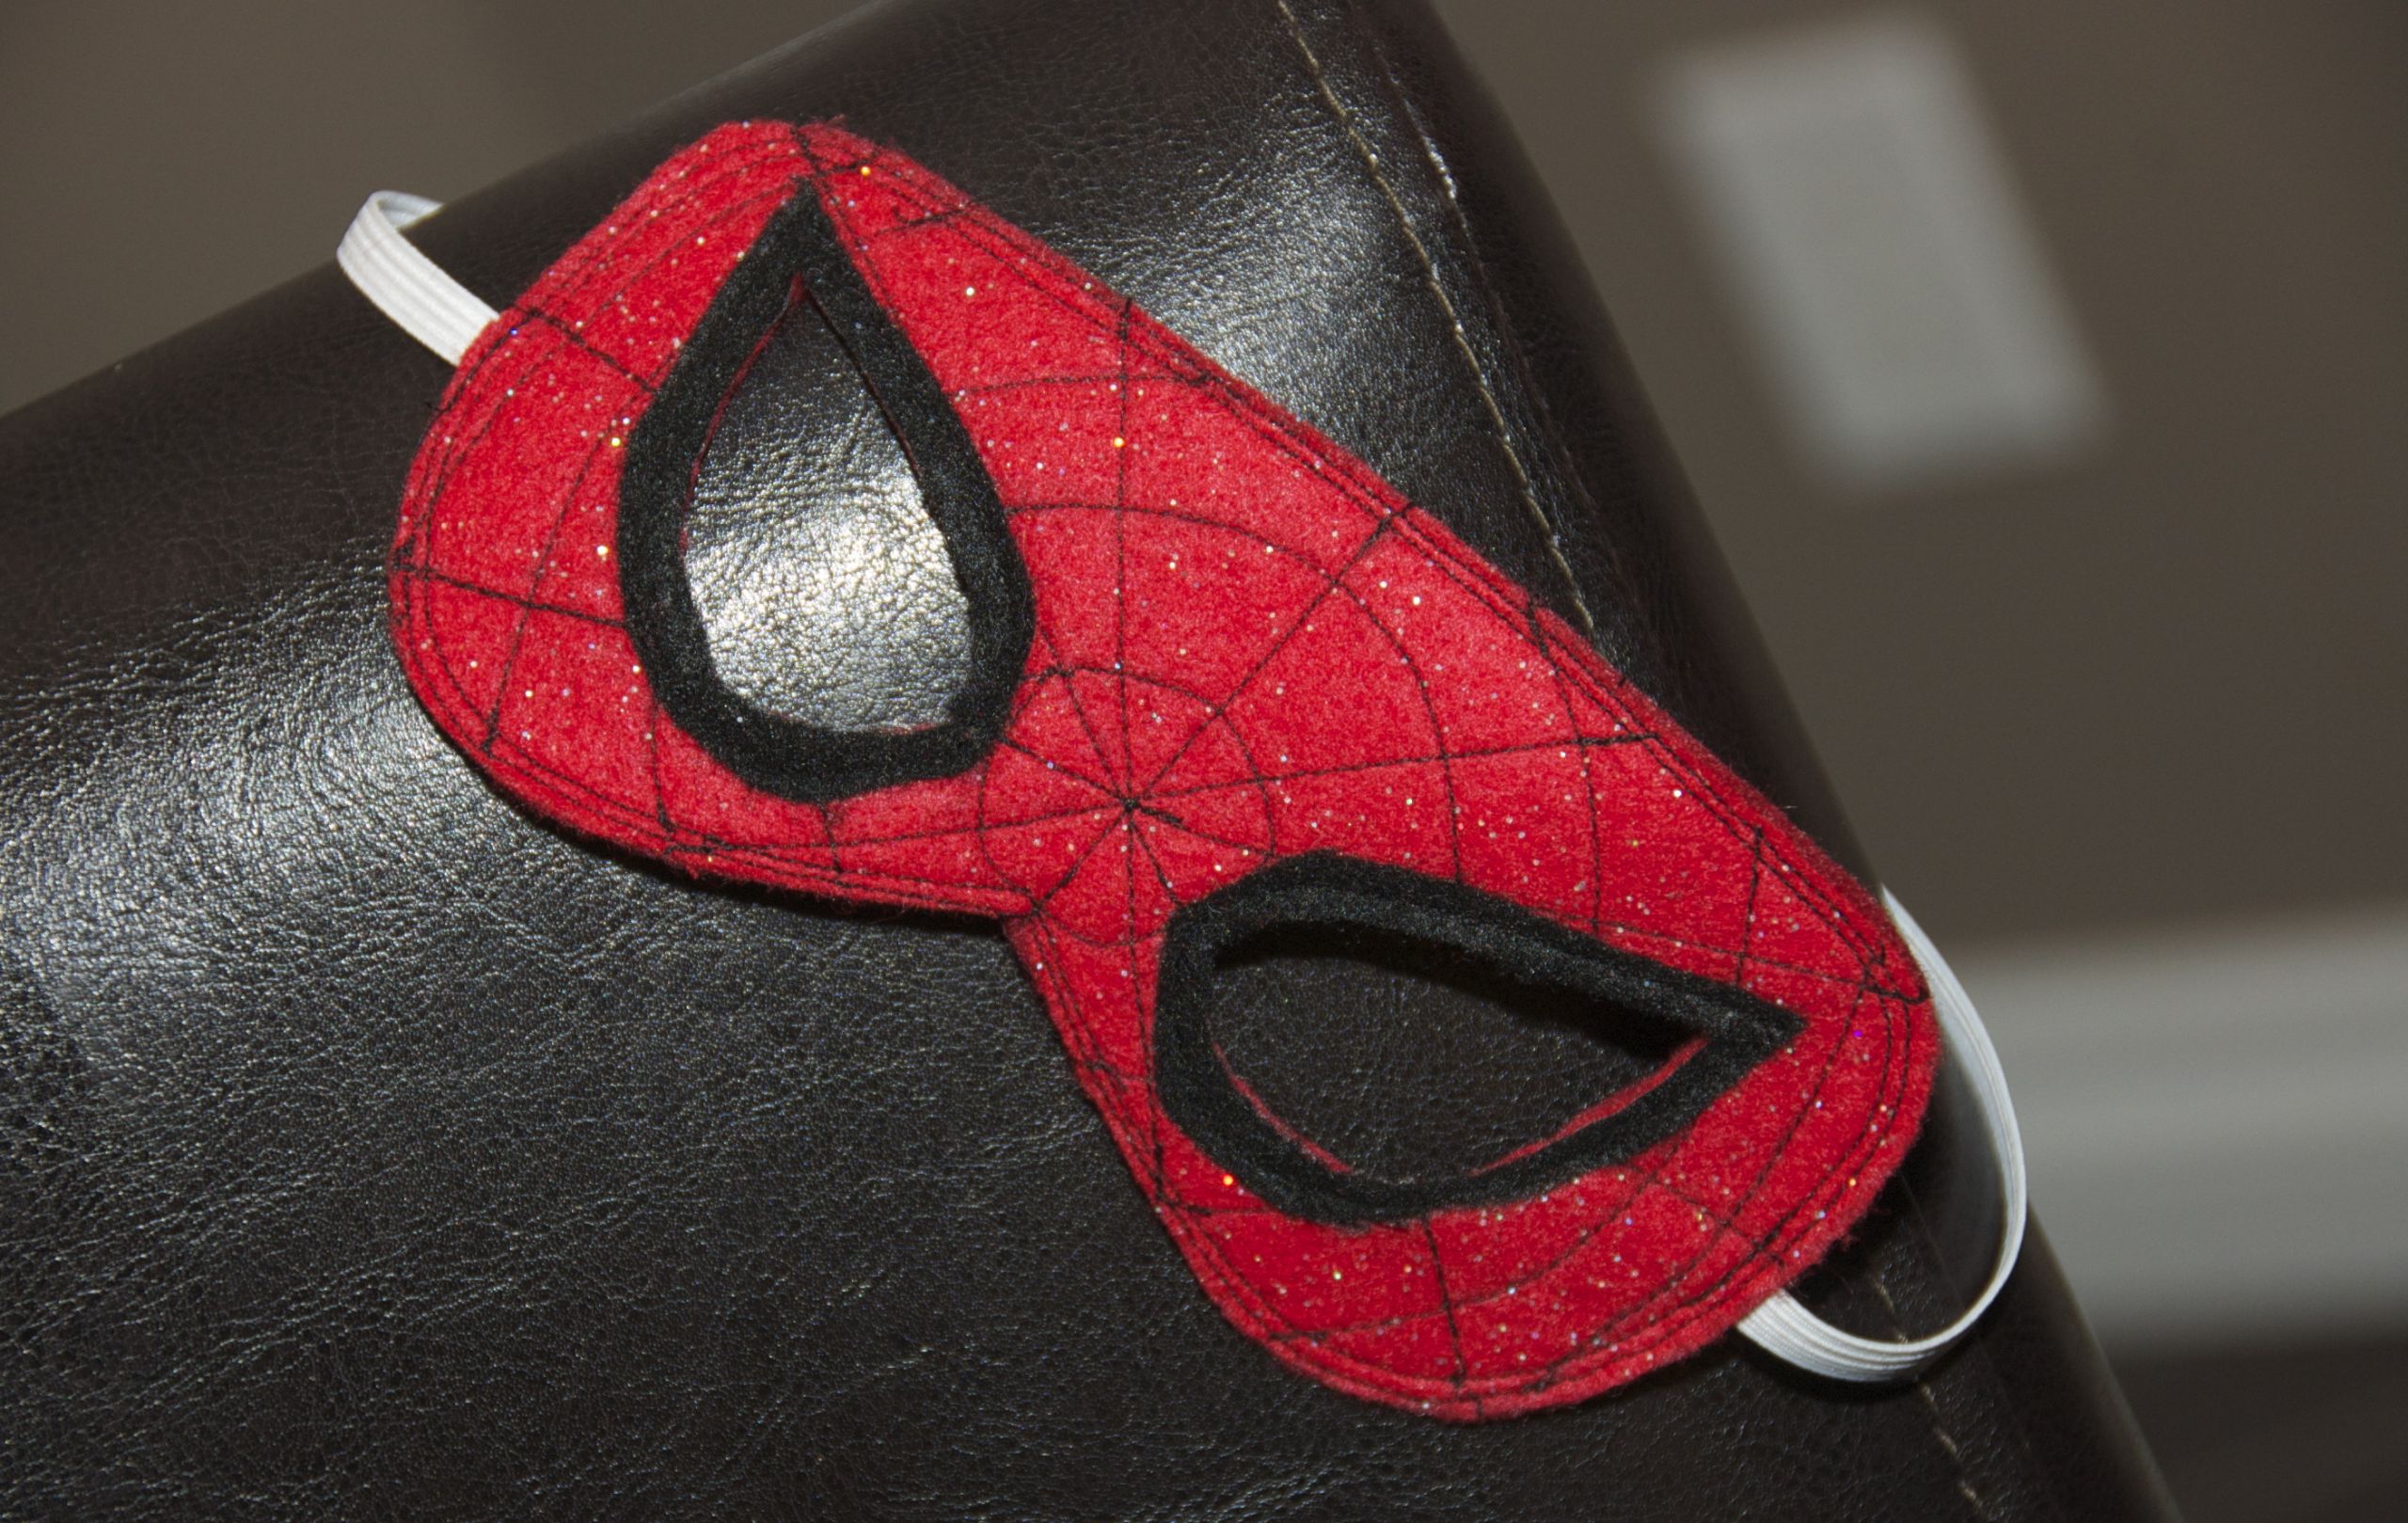 DIY Spiderman Mask
 DIY Spiderman Mask